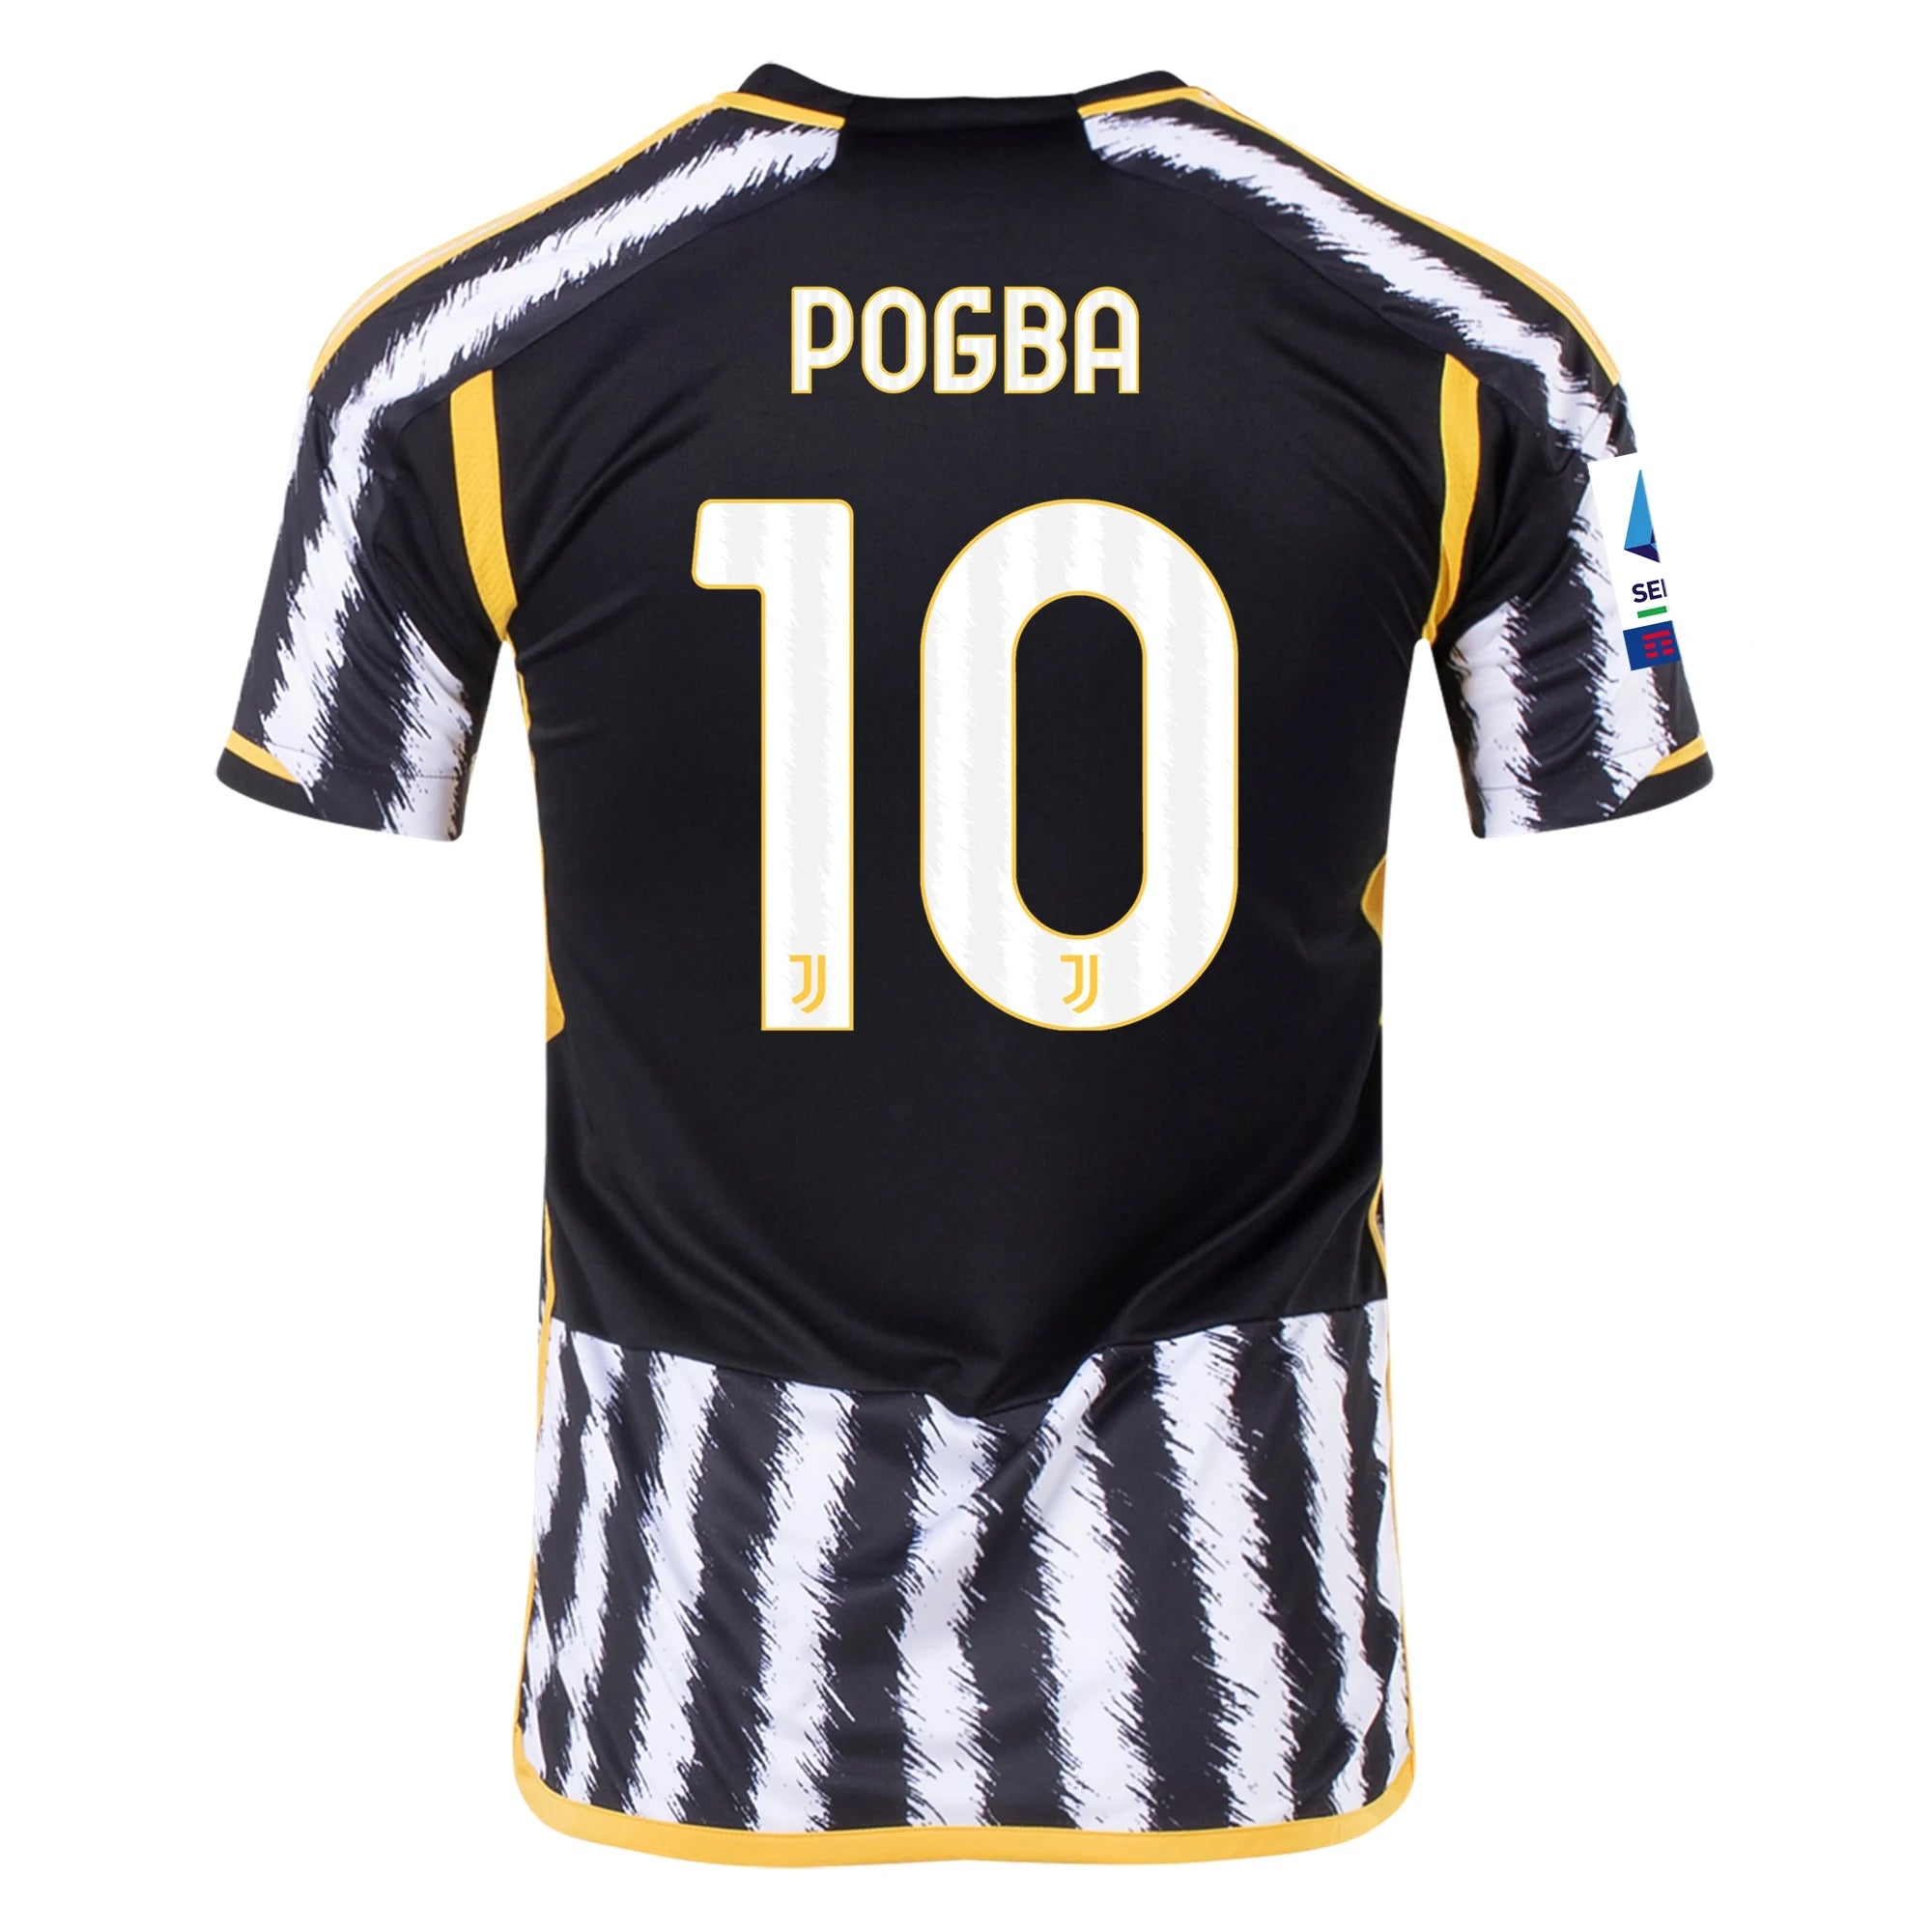 A Closer Look at the adidas Paul Pogba Season II Collection